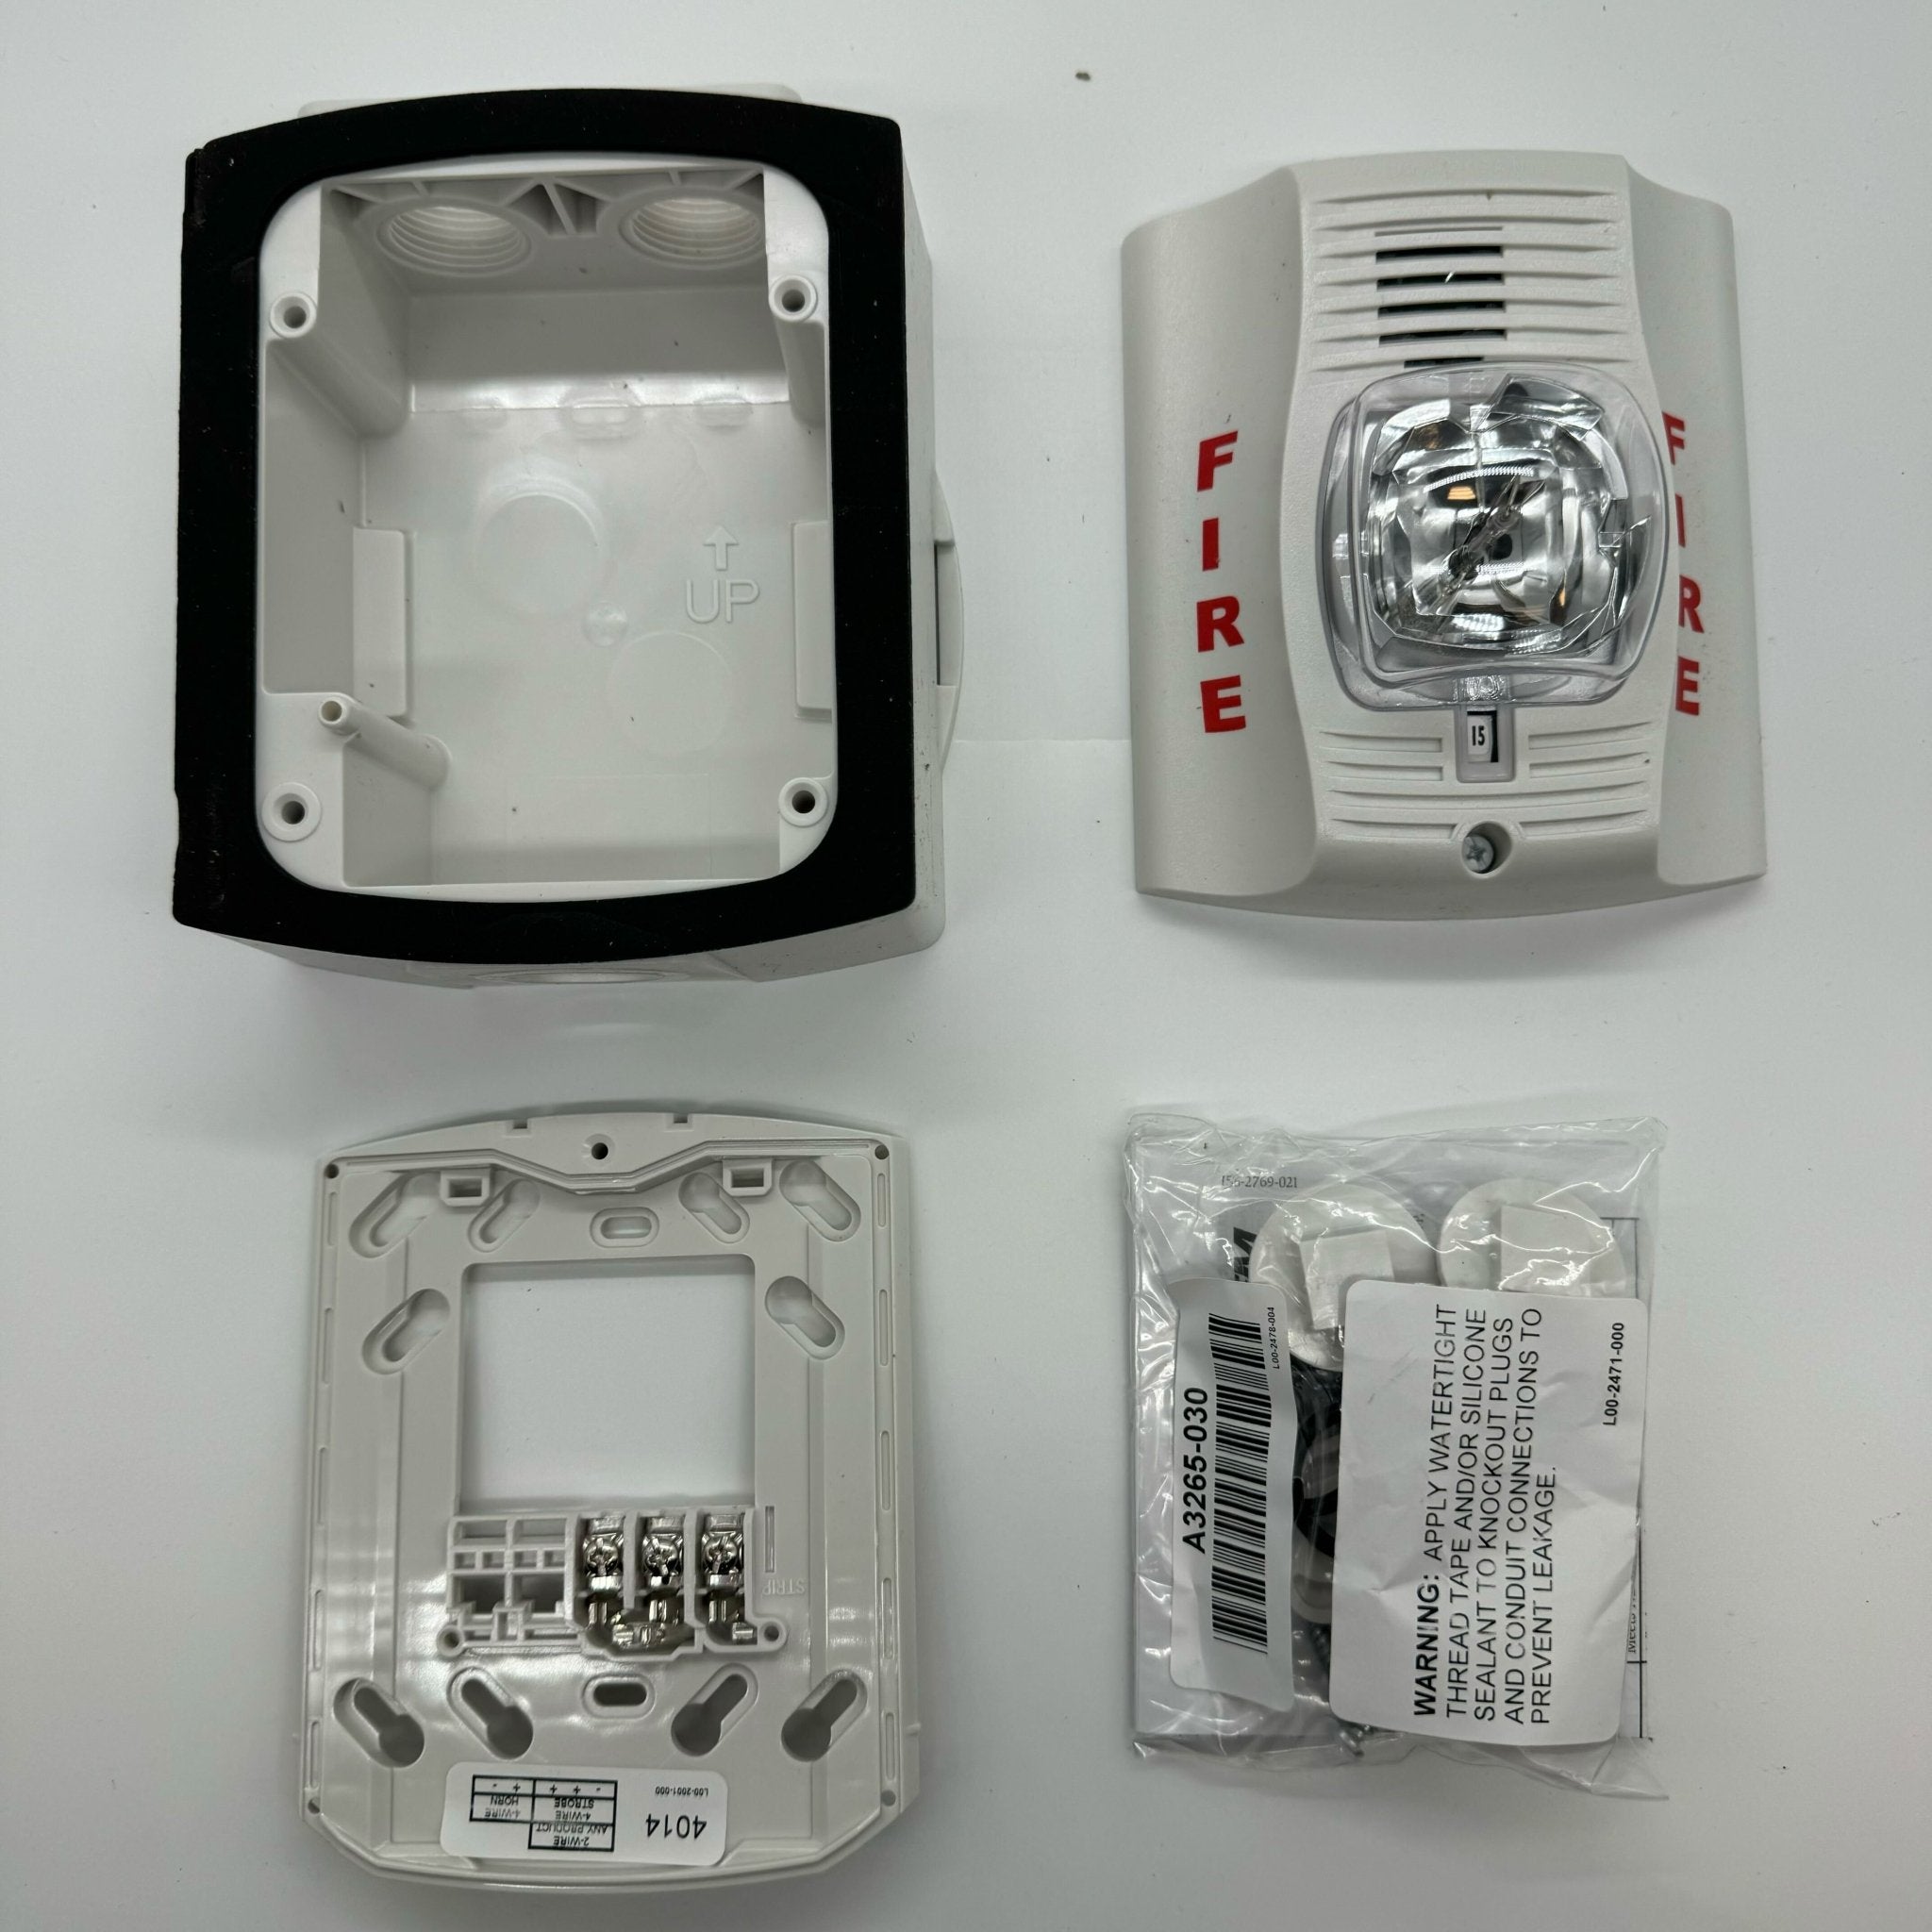 System Sensor P2WK - The Fire Alarm Supplier